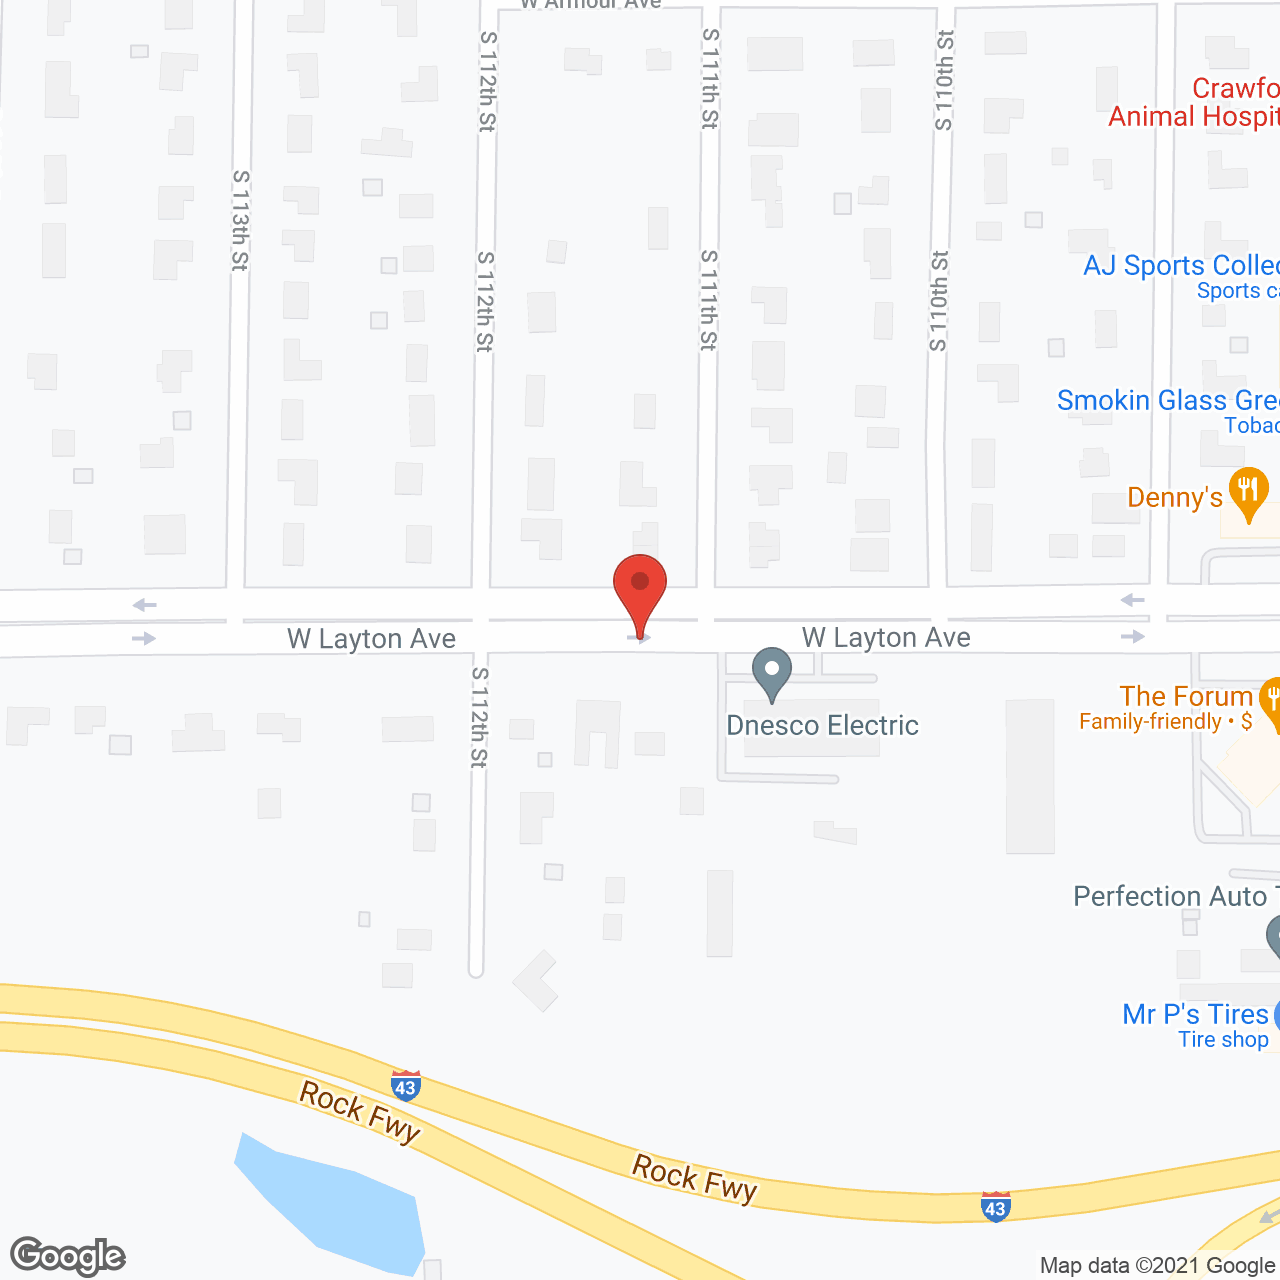 Emerald Castle in google map